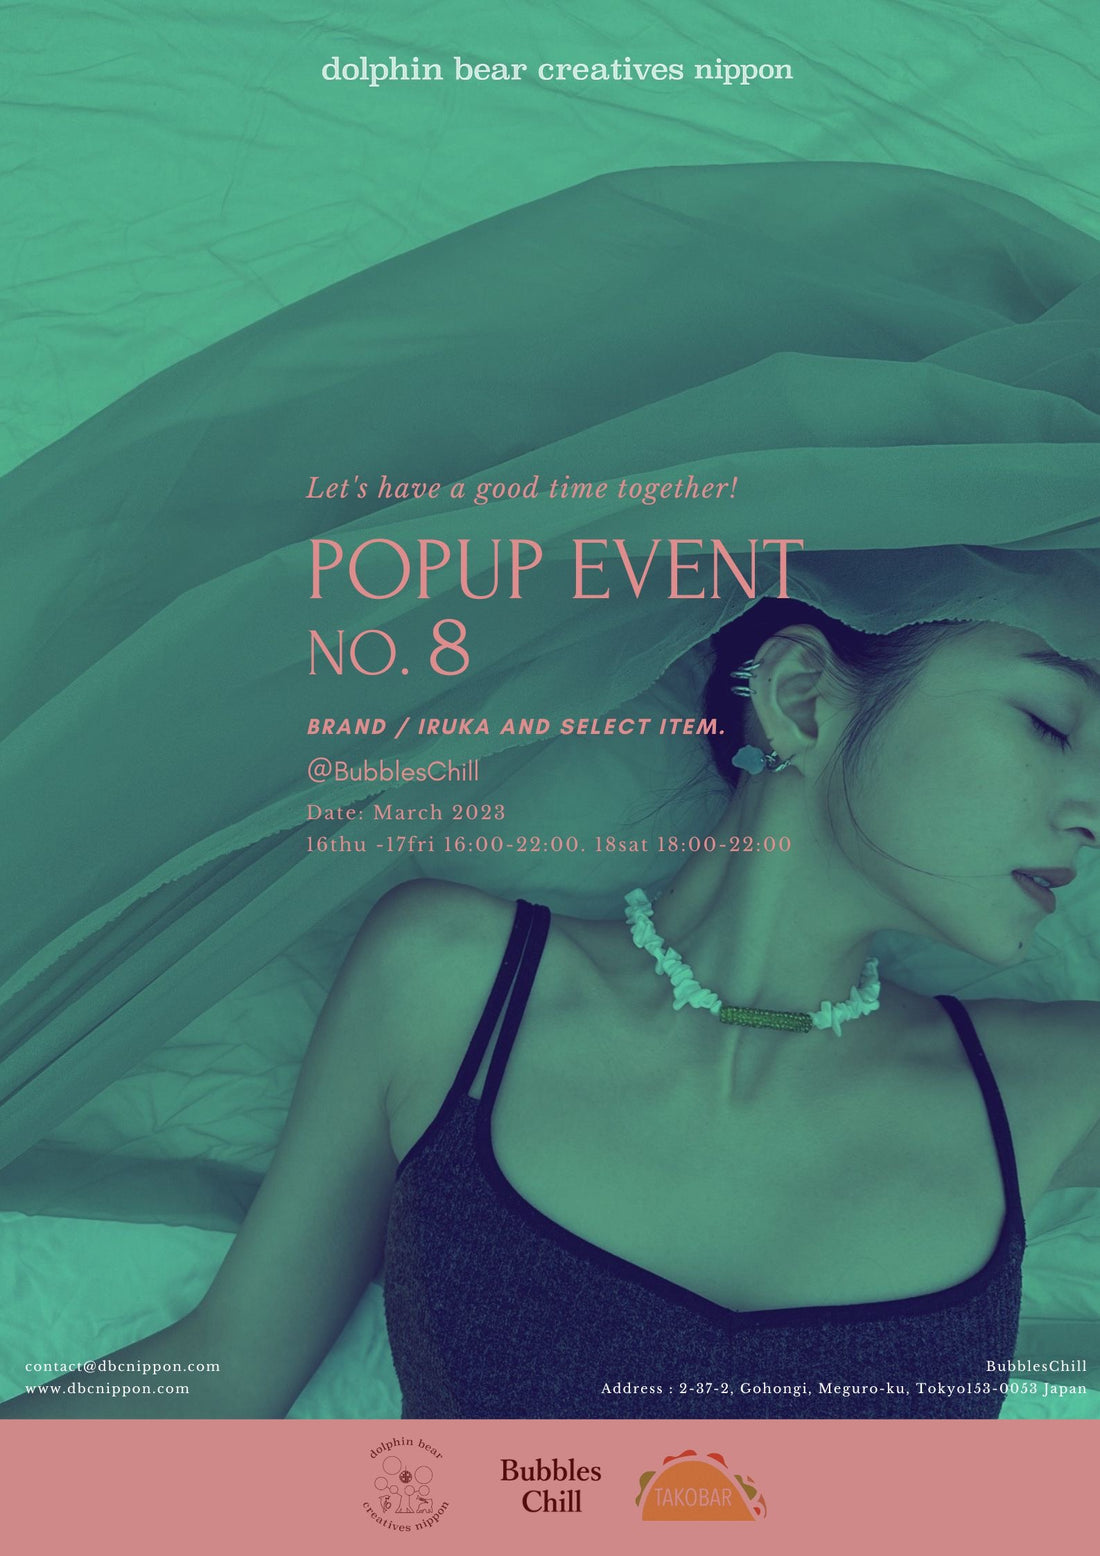 【POP UP EVENT “no.8”】2023.3.16thu -18sat